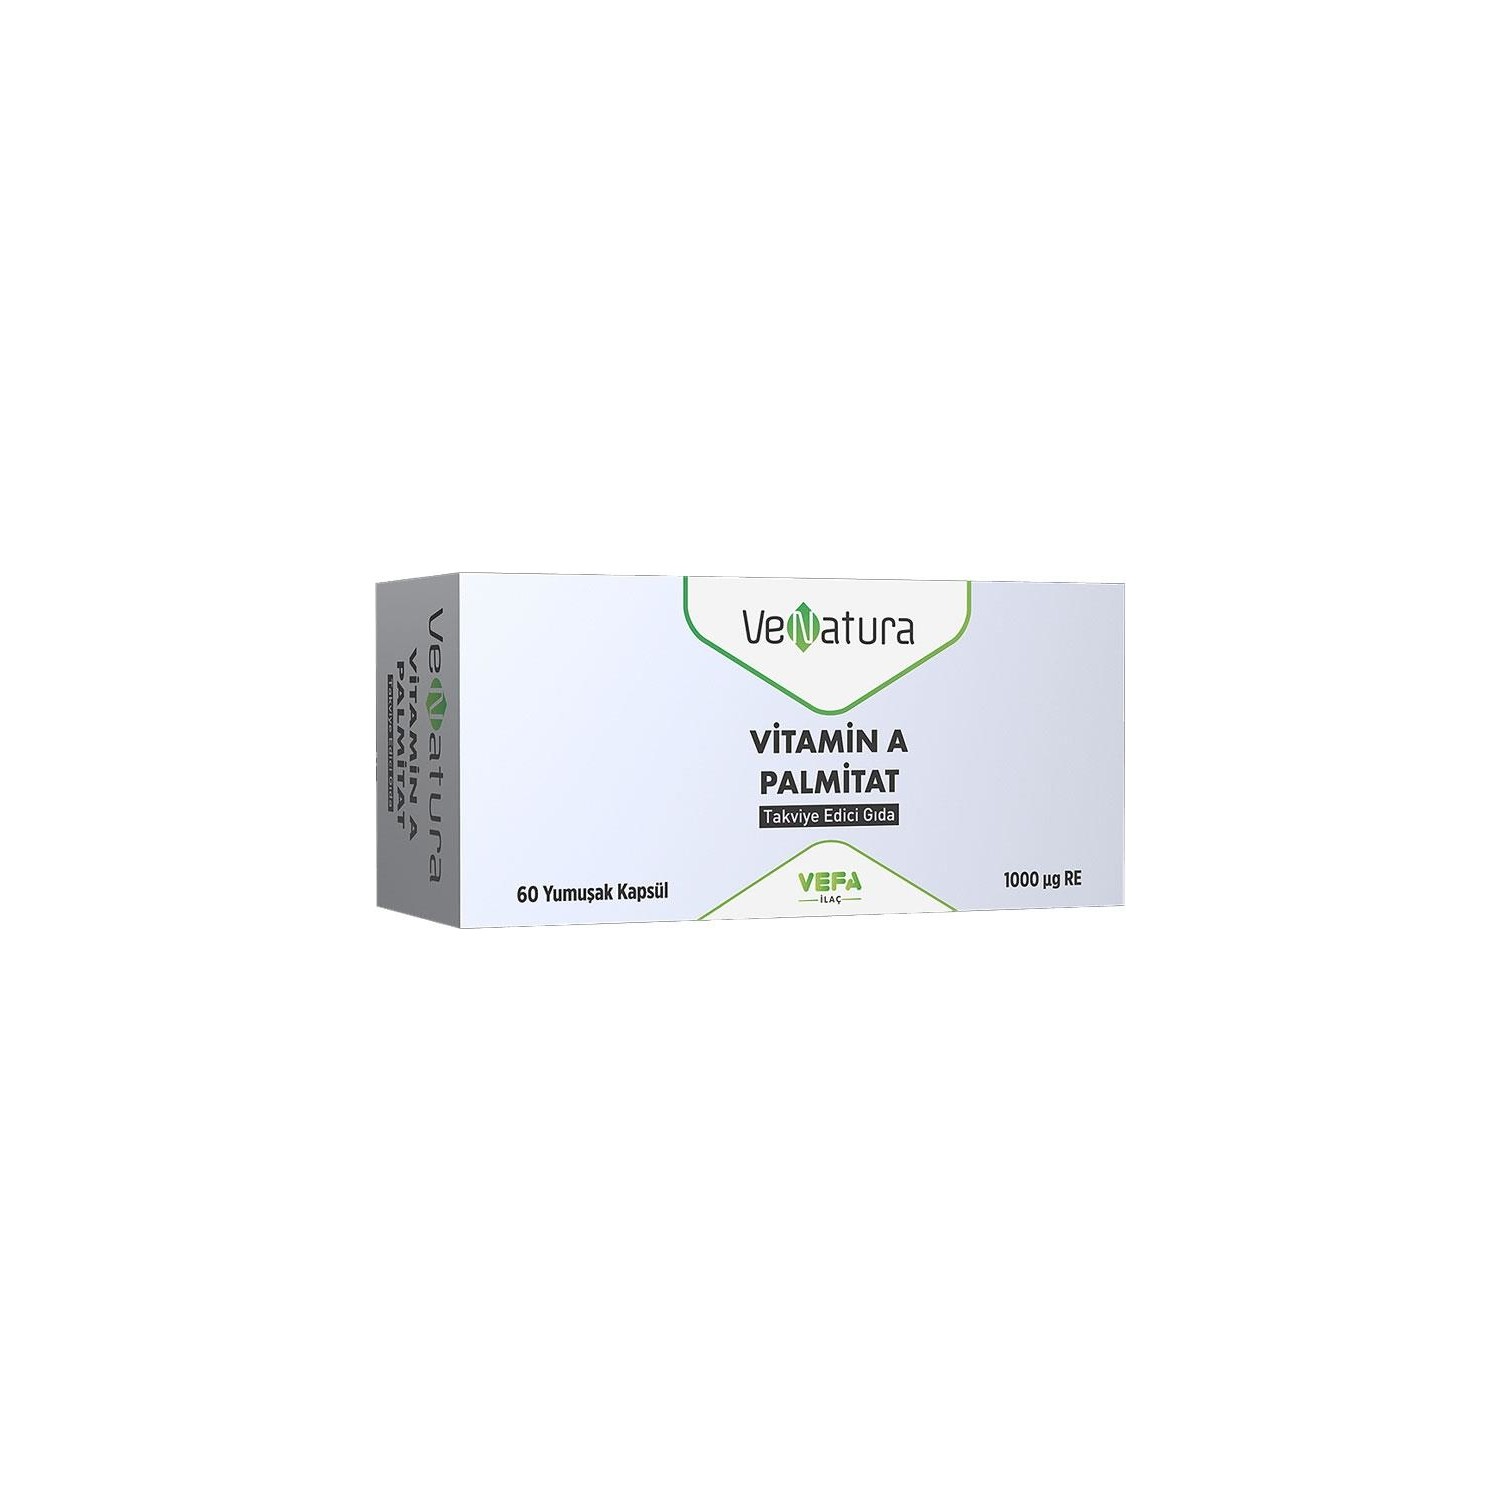 Ретинол пальмитат Venatura, 60 капсул irwin naturals скорая помощь вита c плюс с 1000 мг витамина c 60 мягких капсул